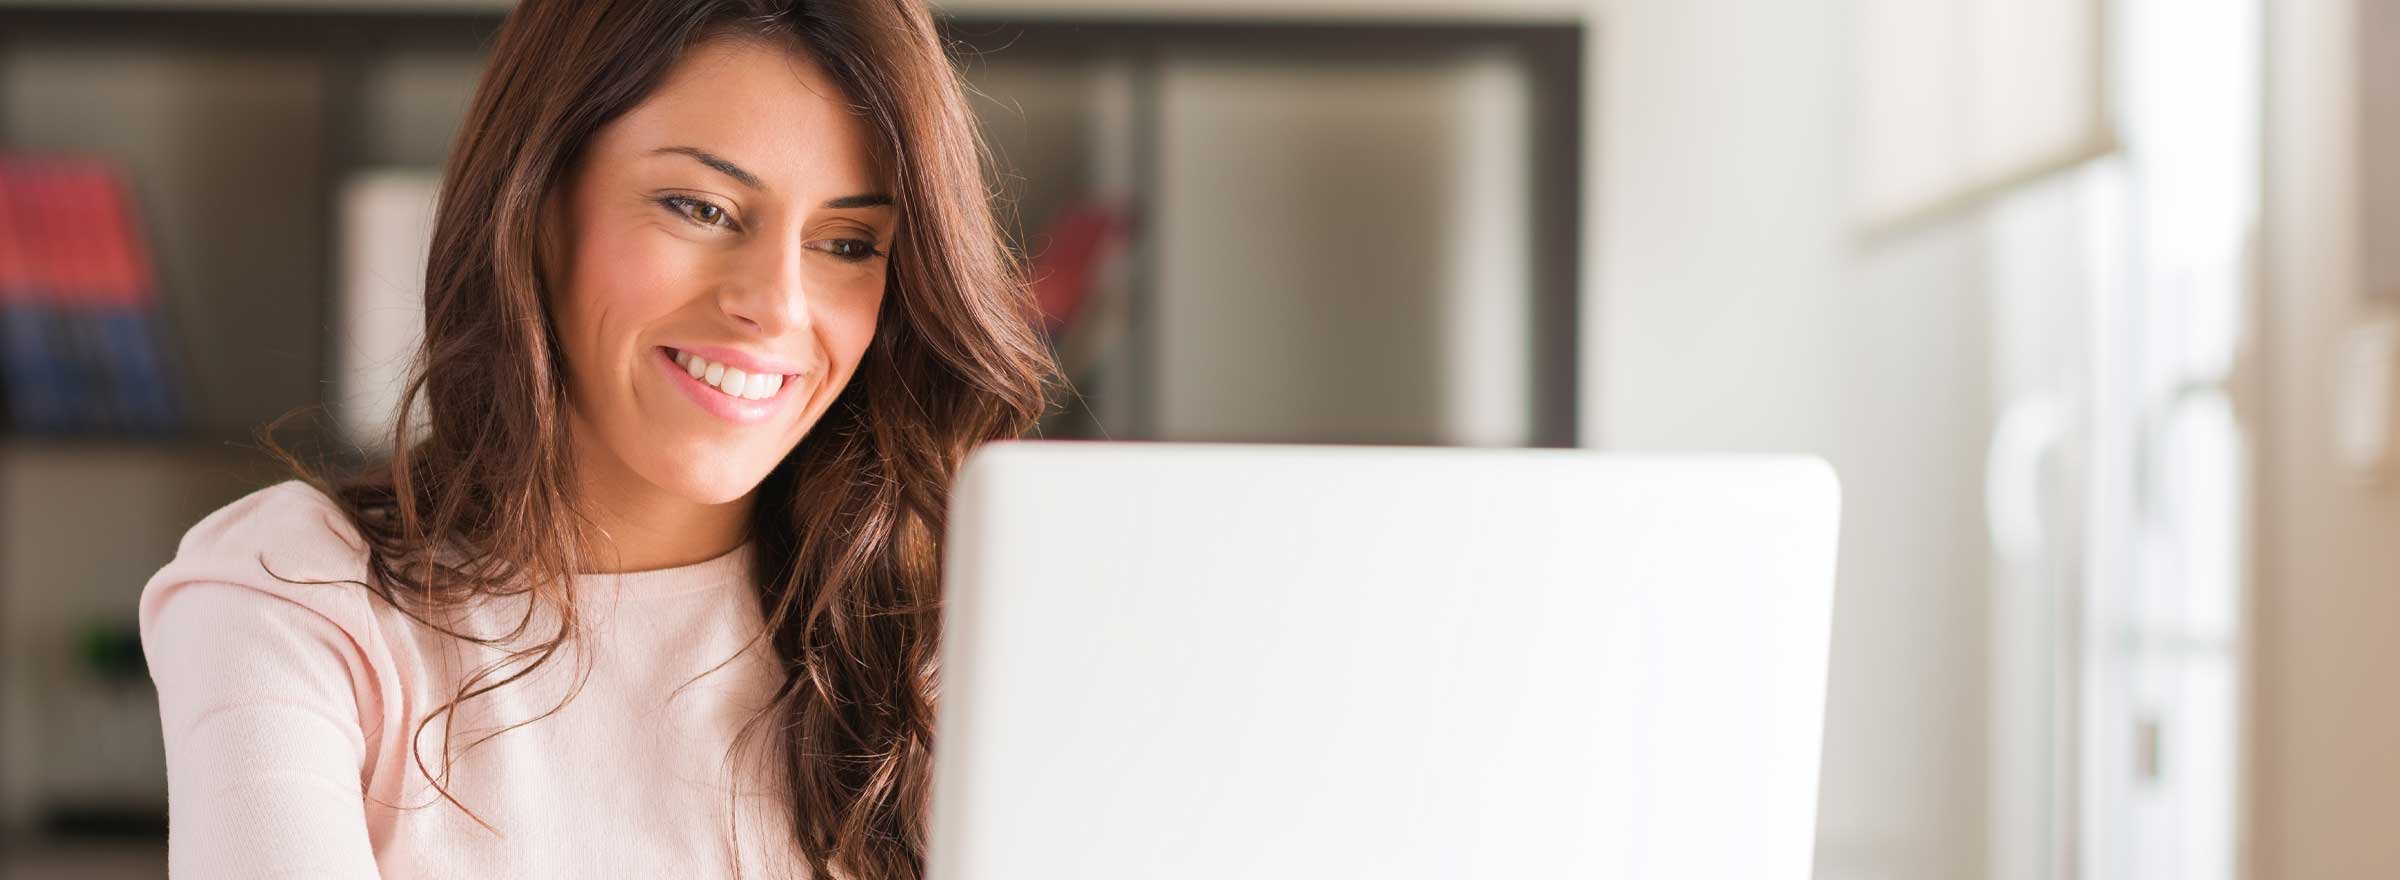 woman smiling at computer screen